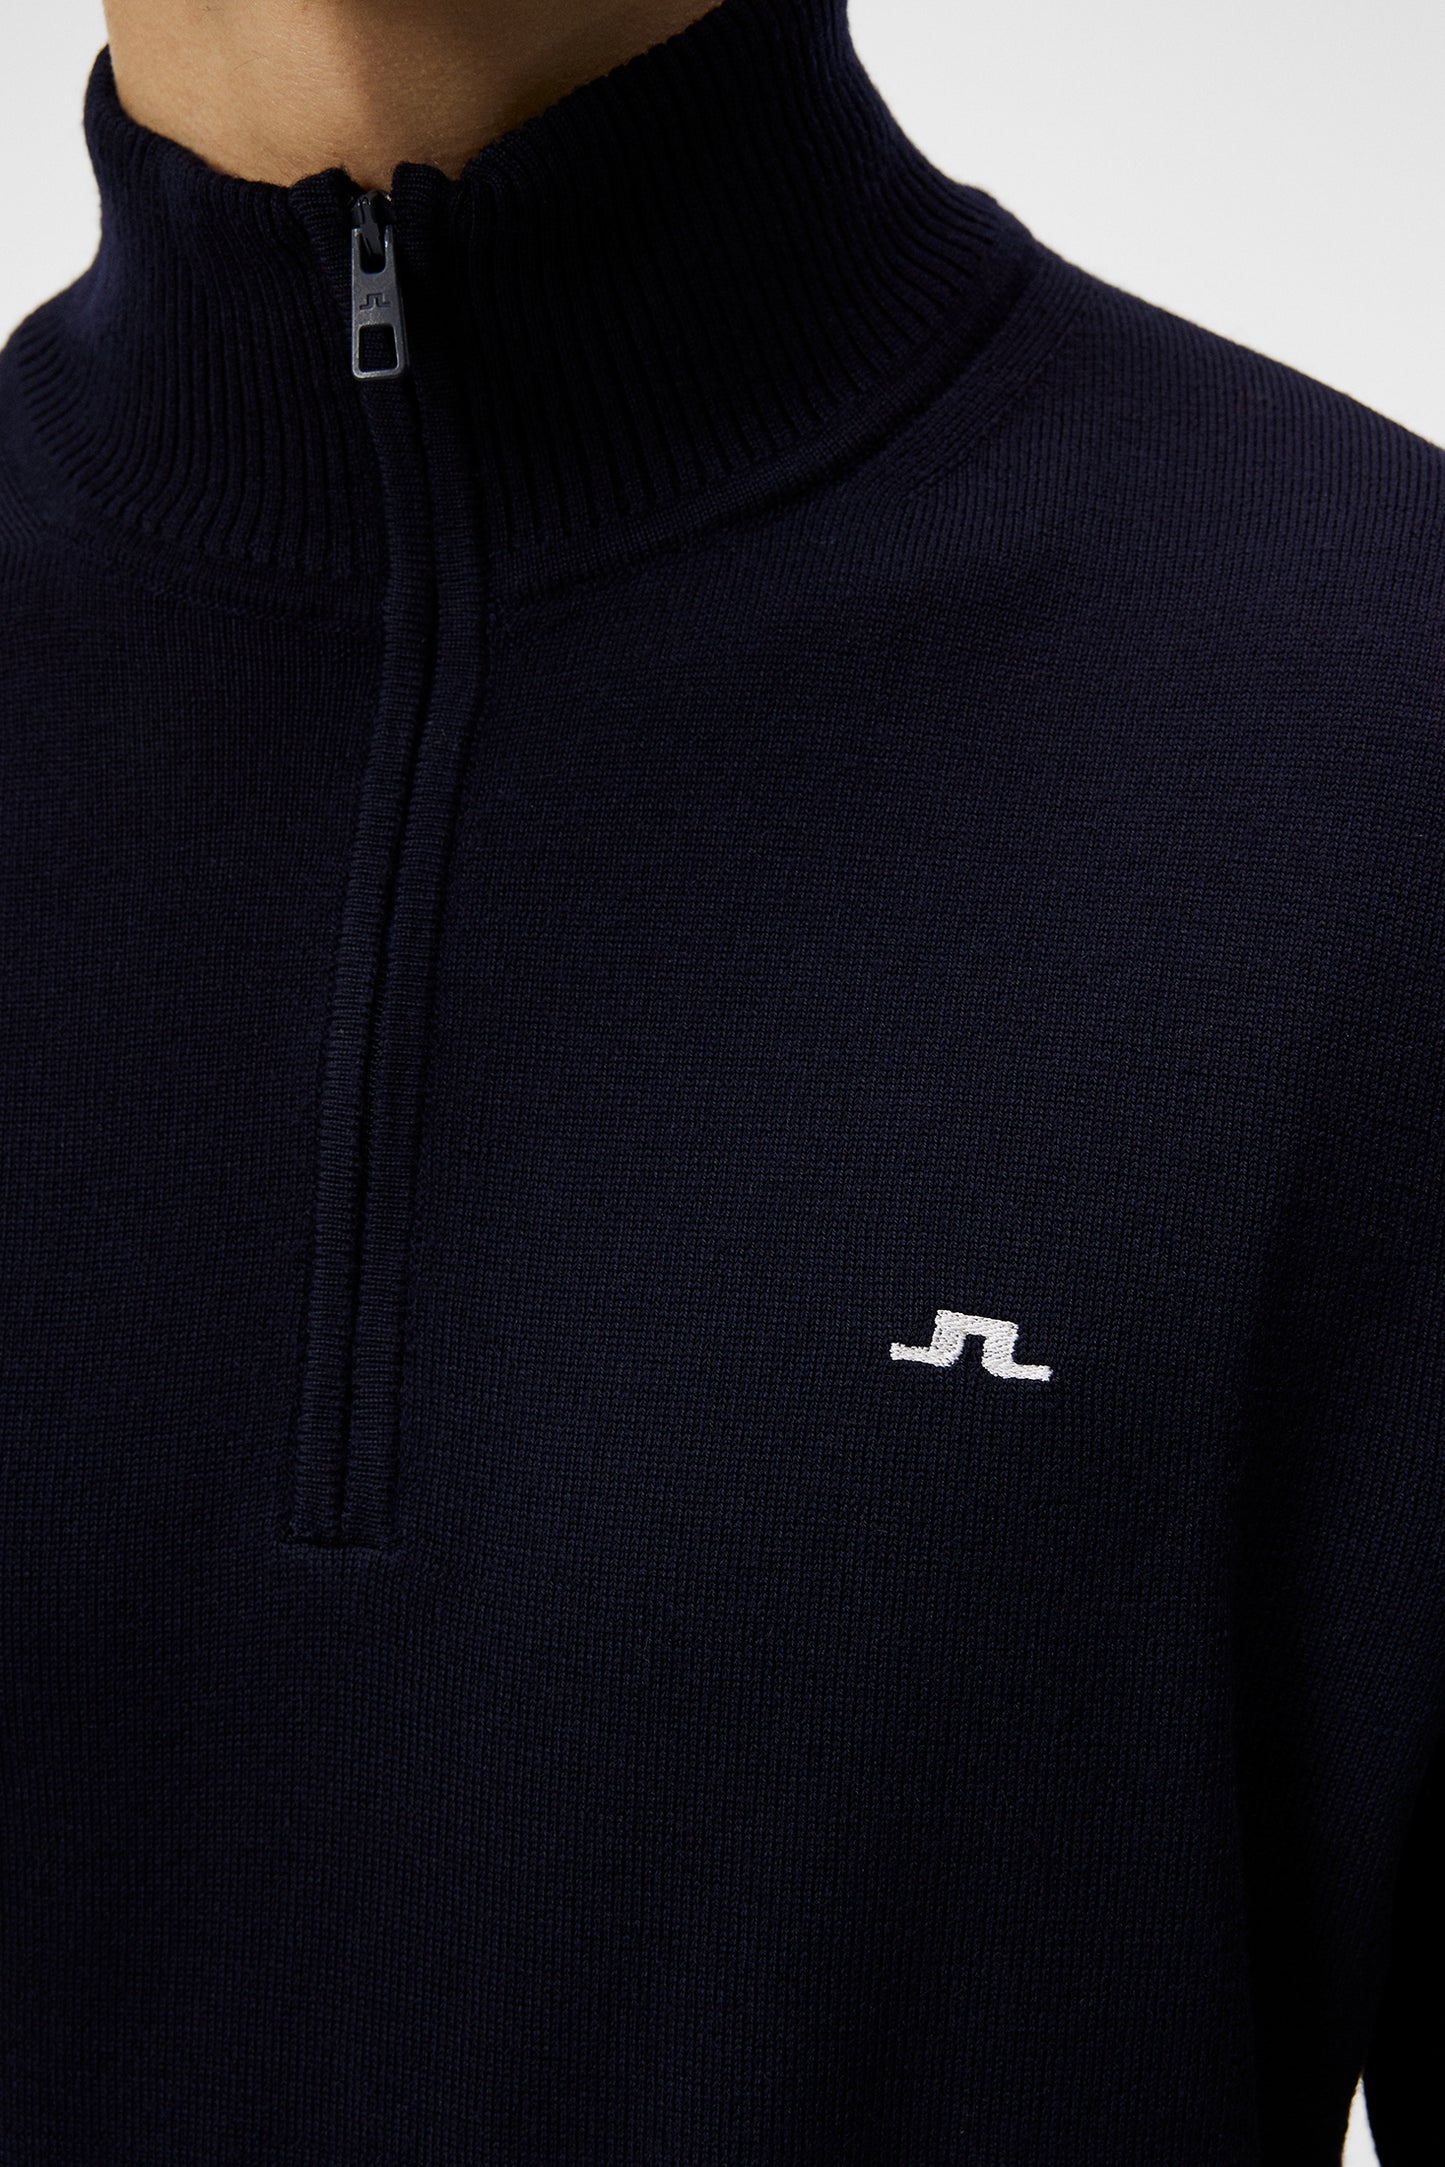 Kian Knitted Sweater / JL Navy